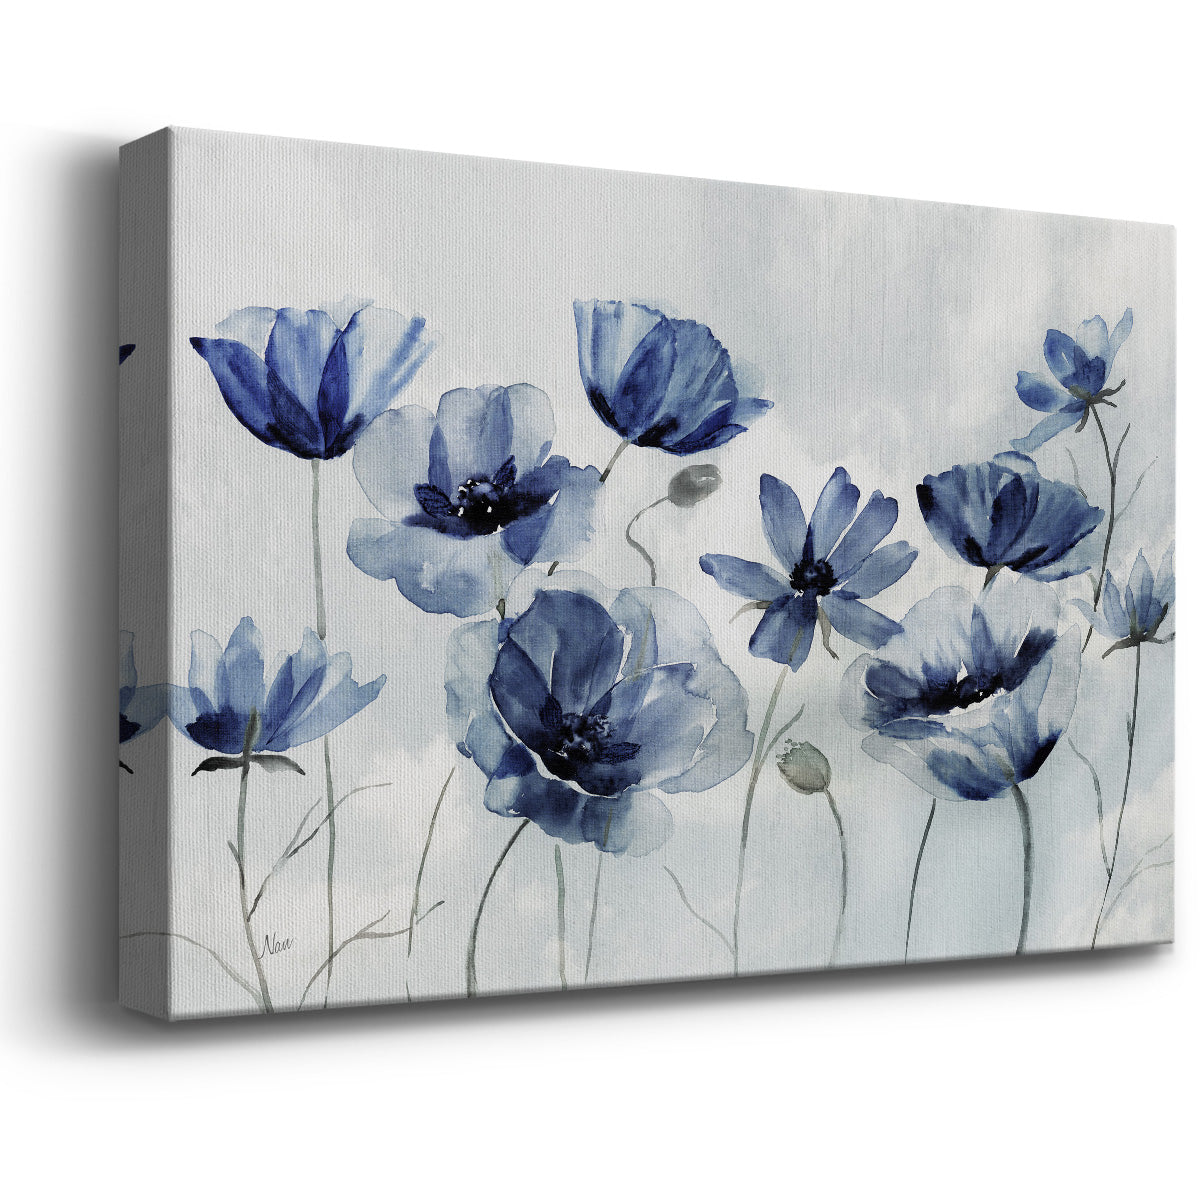 Indigo Spring Awakening Premium Gallery Wrapped Canvas - Ready to Hang